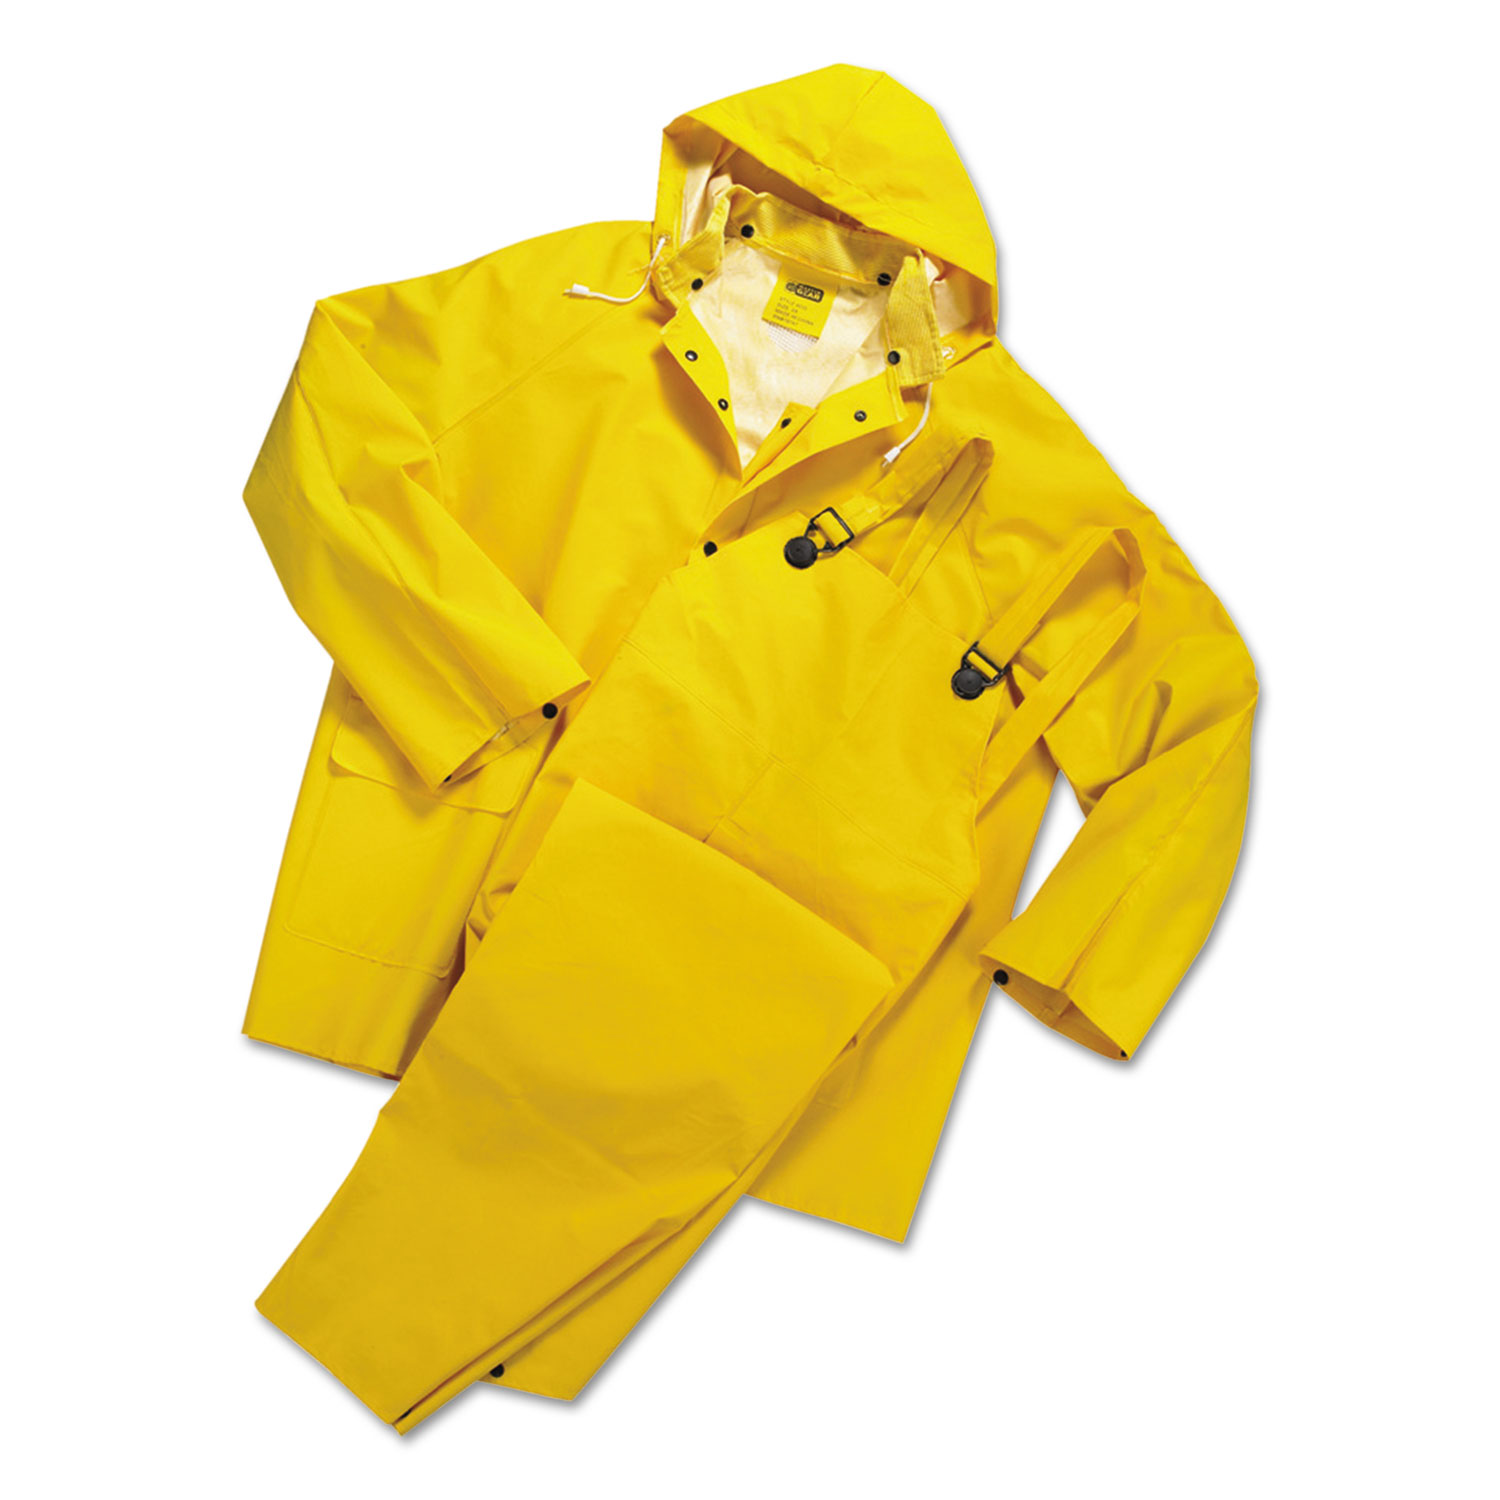  Anchor Brand 4035/L Rainsuit, PVC/Polyester, Yellow, Large (ANR9000L) 